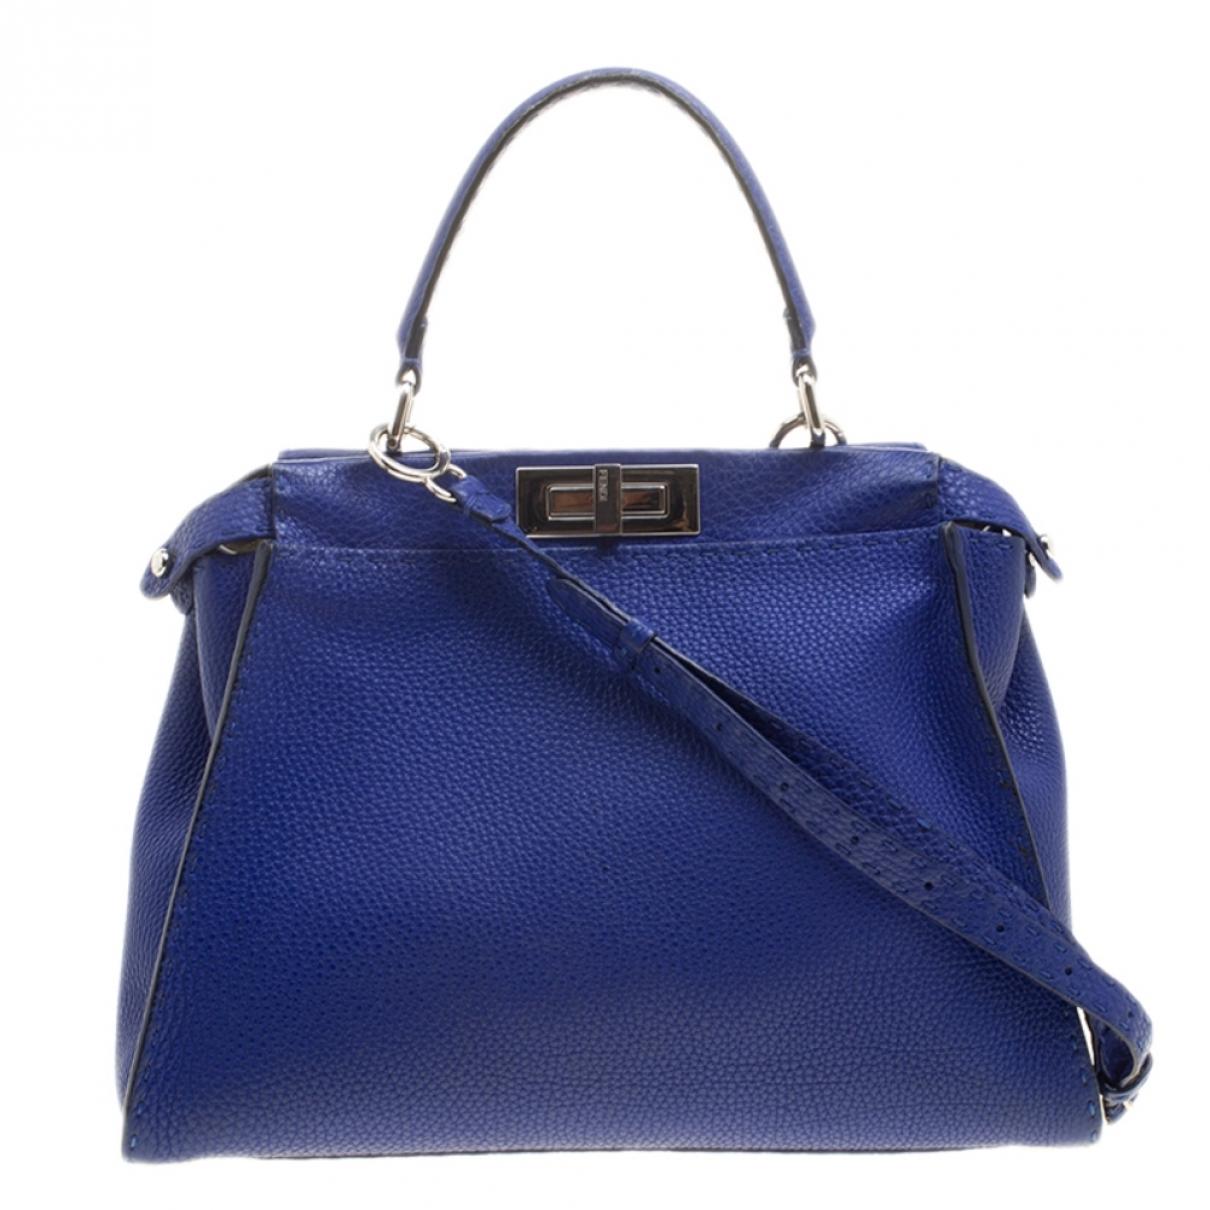 Fendi Peekaboo Blue Leather Handbag in Blue - Lyst